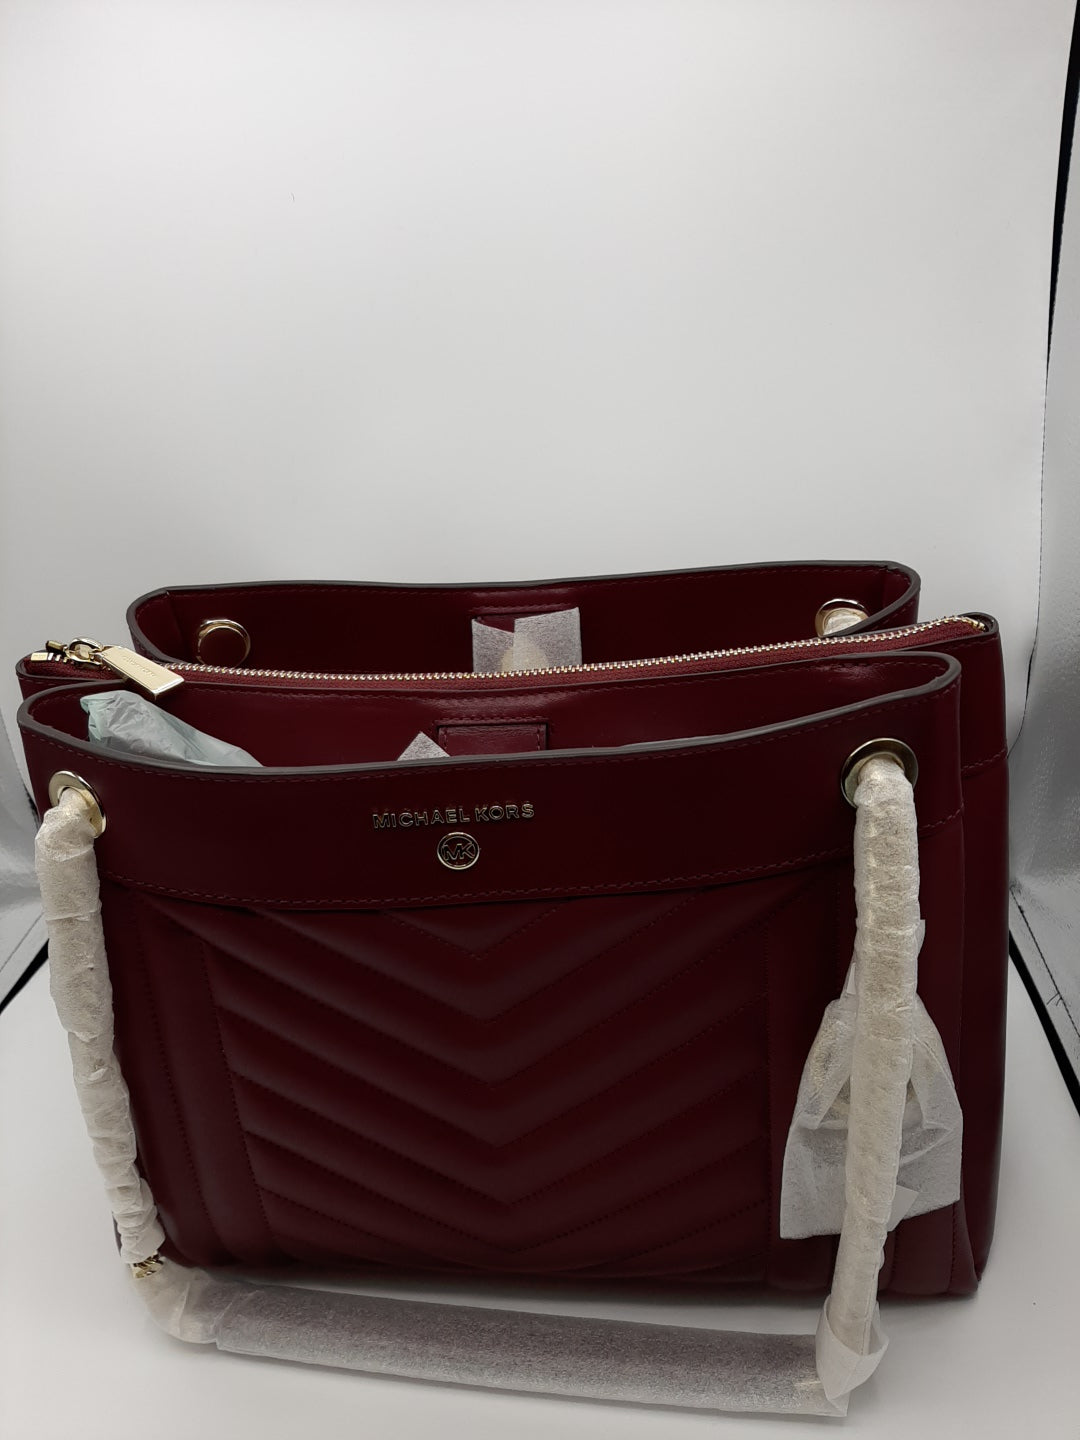 Michael Kors Susan Quilted Leather Medium Shoulder Bag - Dark Berry